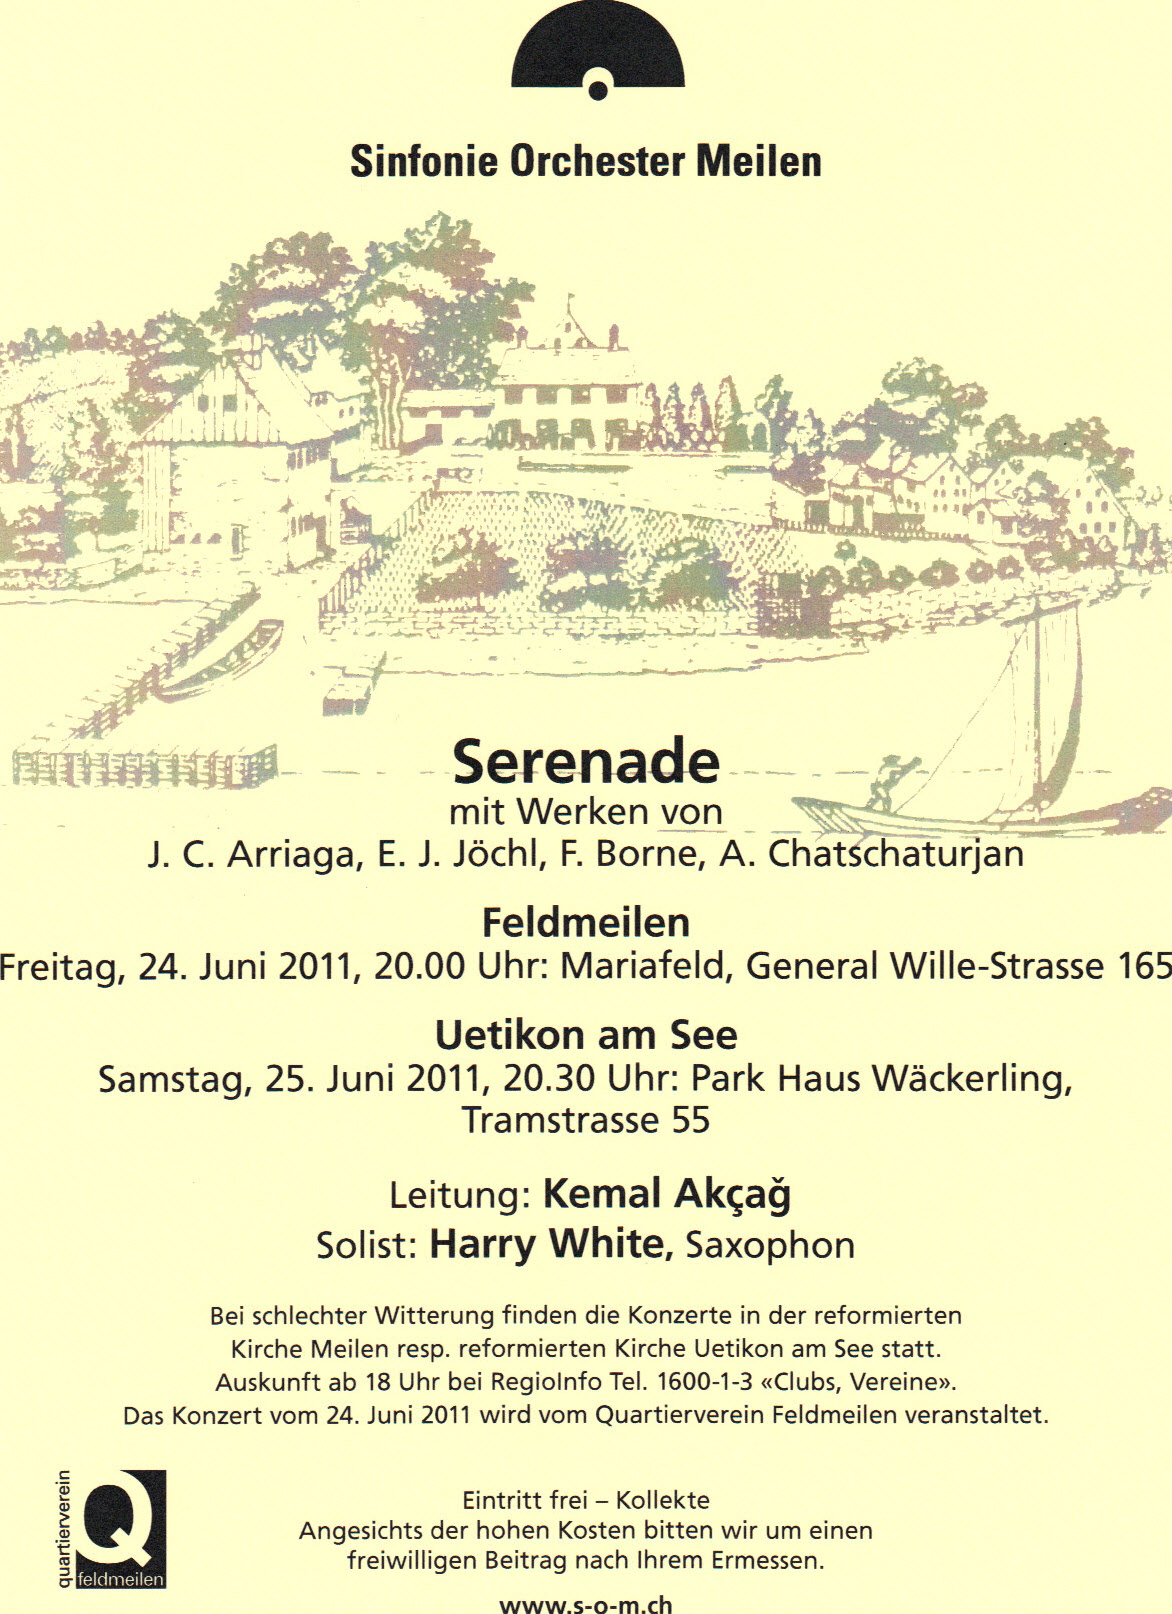 Plakat Sinfonieorchester Meilen, 2011